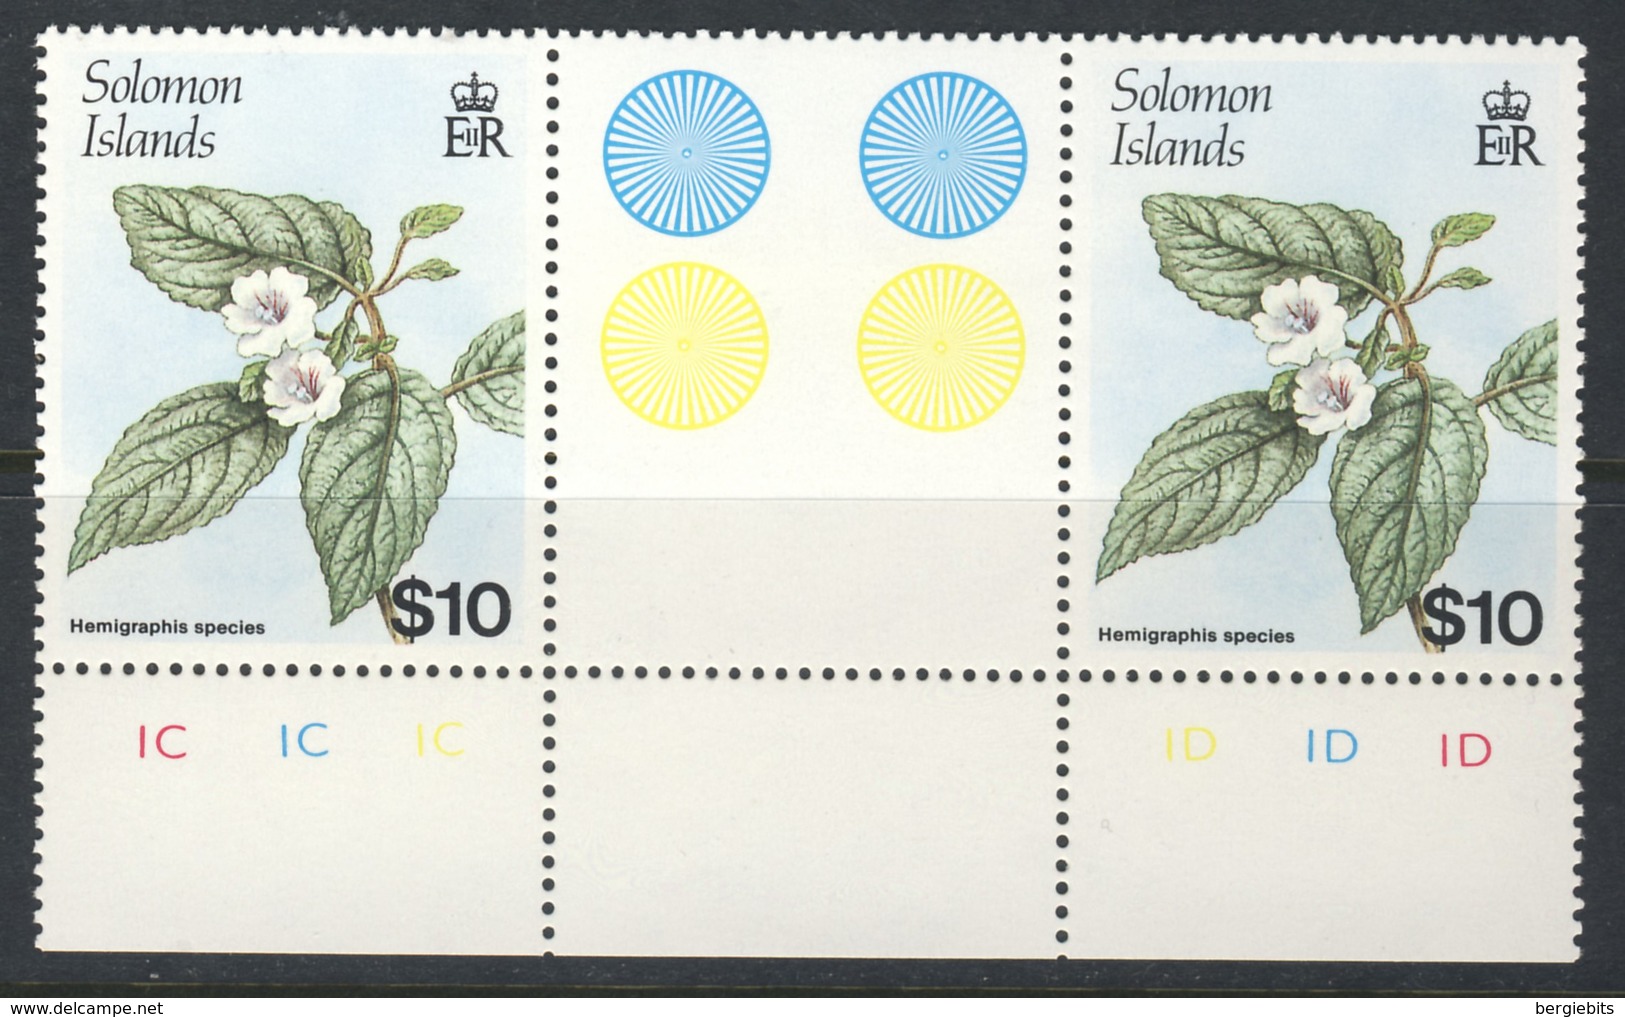 1988 Solomon Islands MNH OG Very Scarce Gutter Pair Of The 10 Dollar High Value "Native Flowers" Stamp, Michel 675 - Solomon Islands (1978-...)